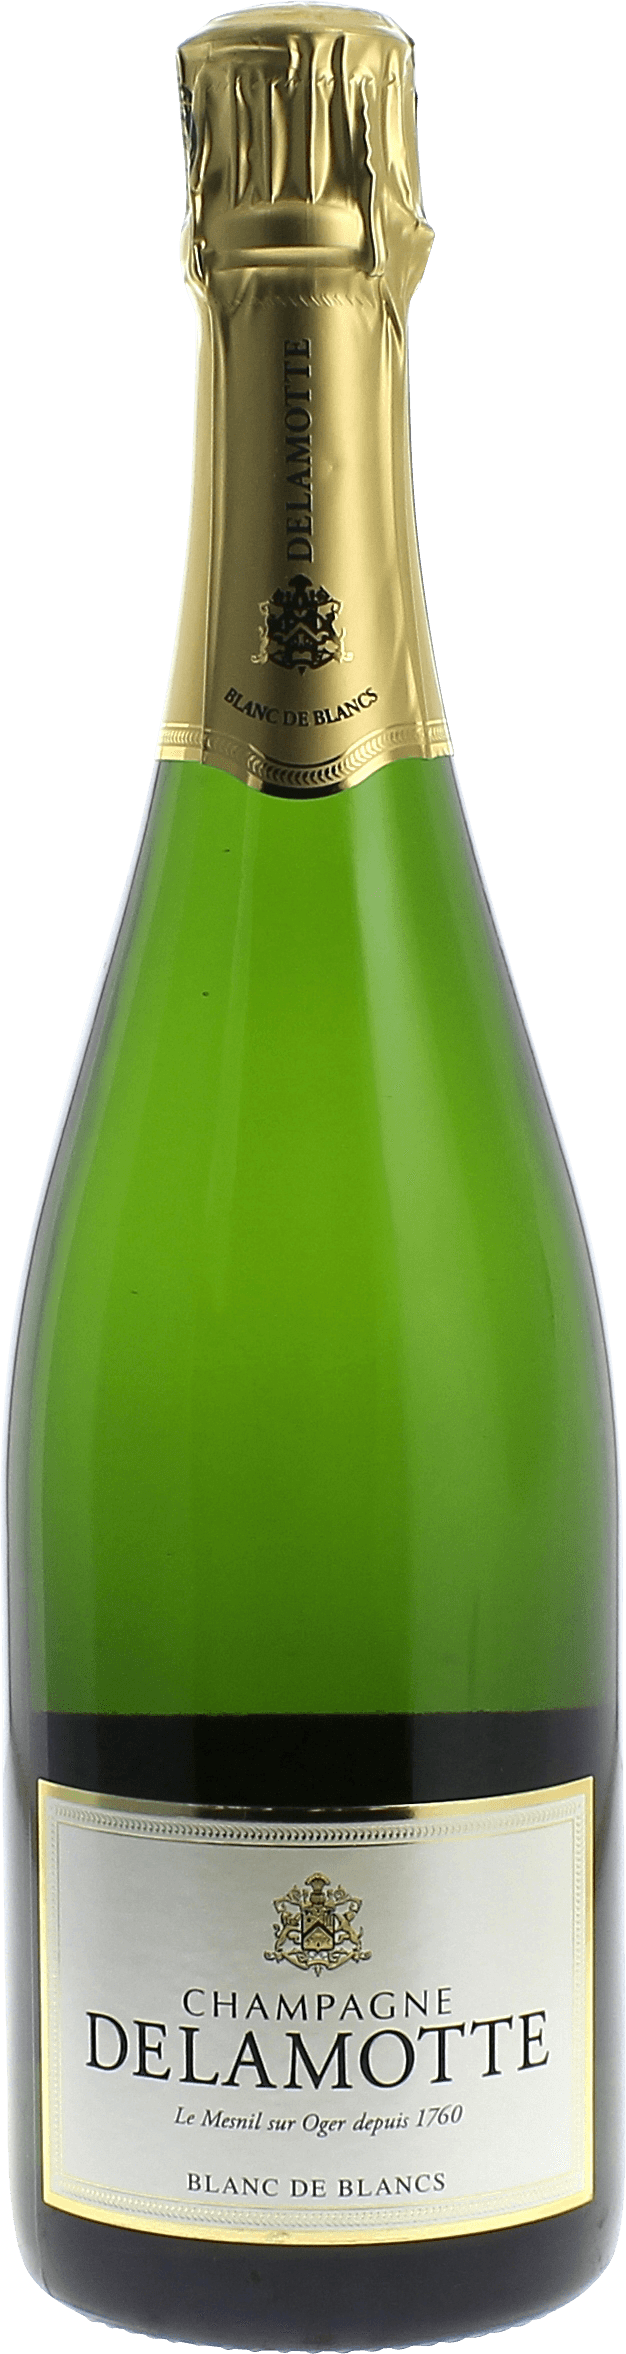 Delamotte blanc de blancs 2018  Delamotte, Champagne